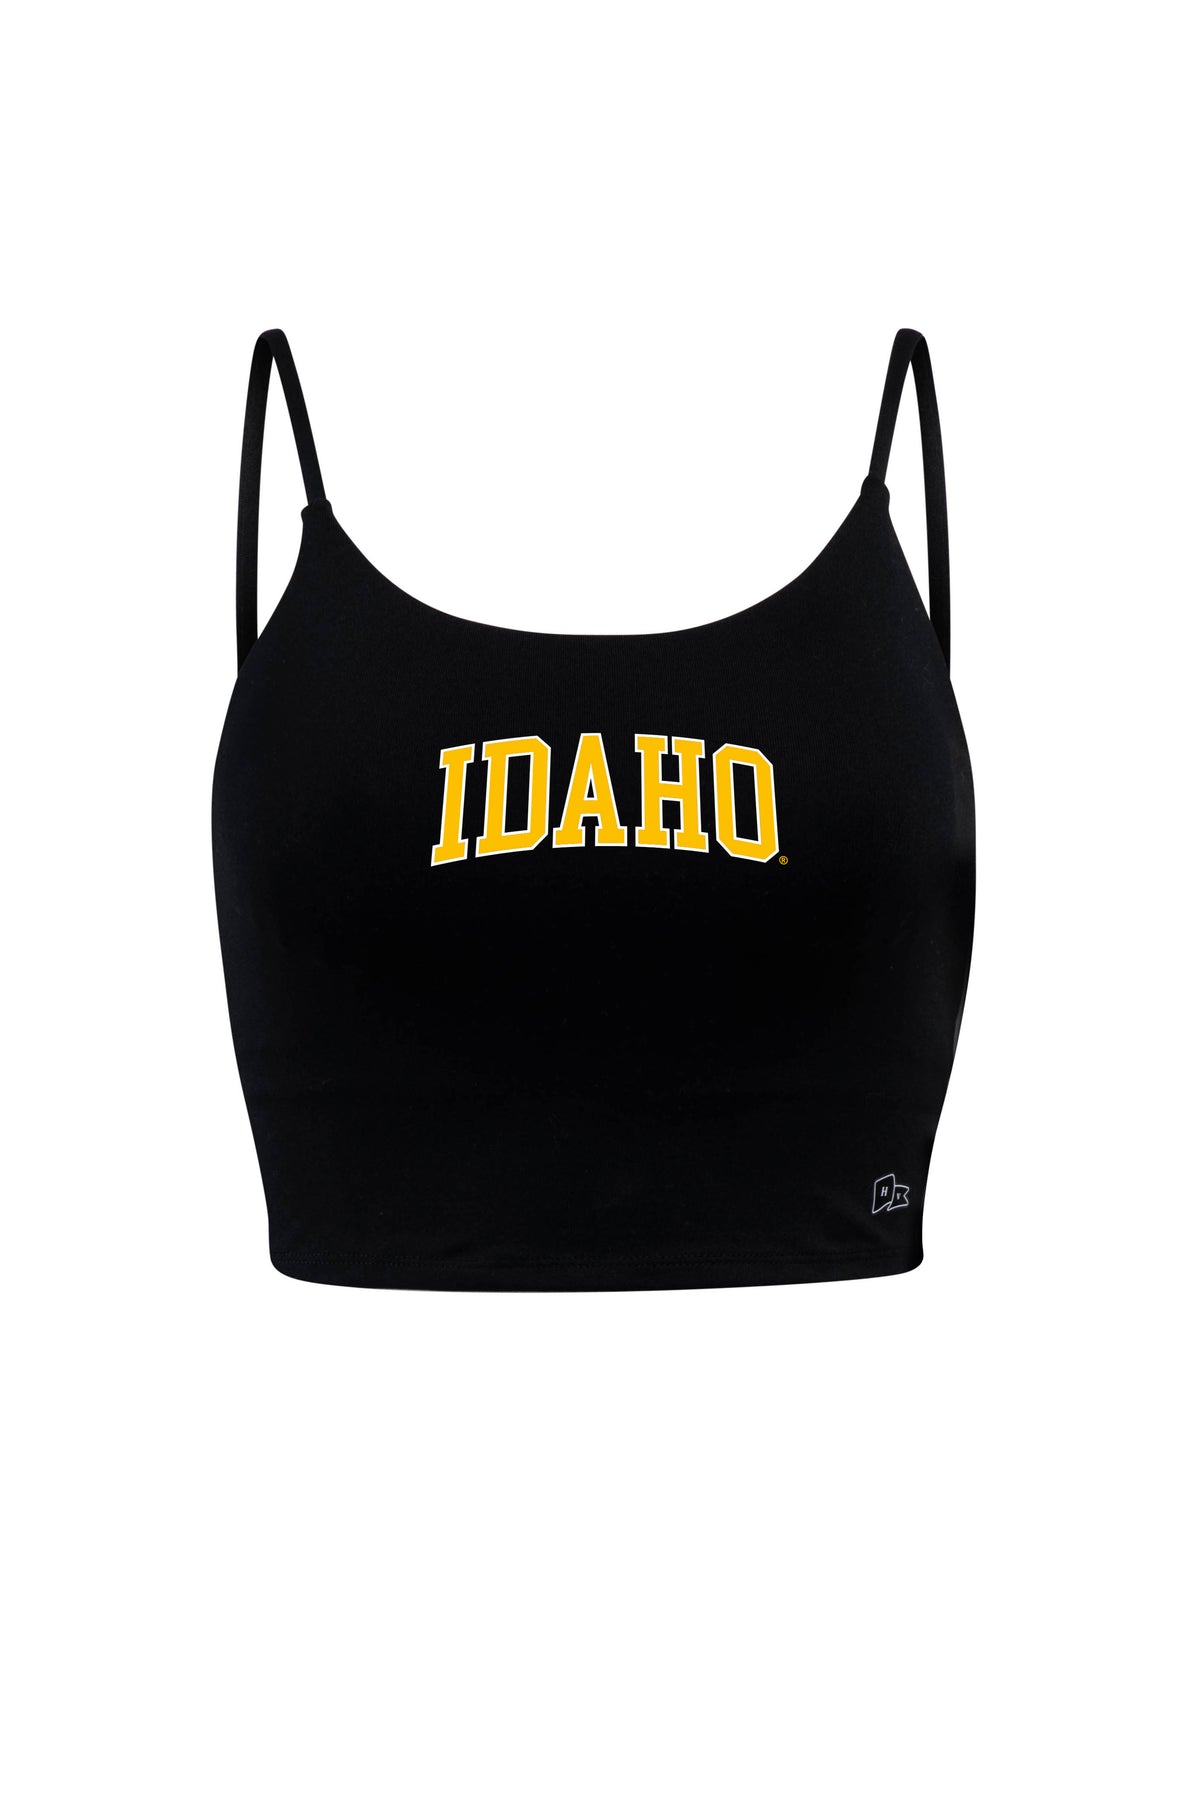 University of Idaho Bra Tank Top